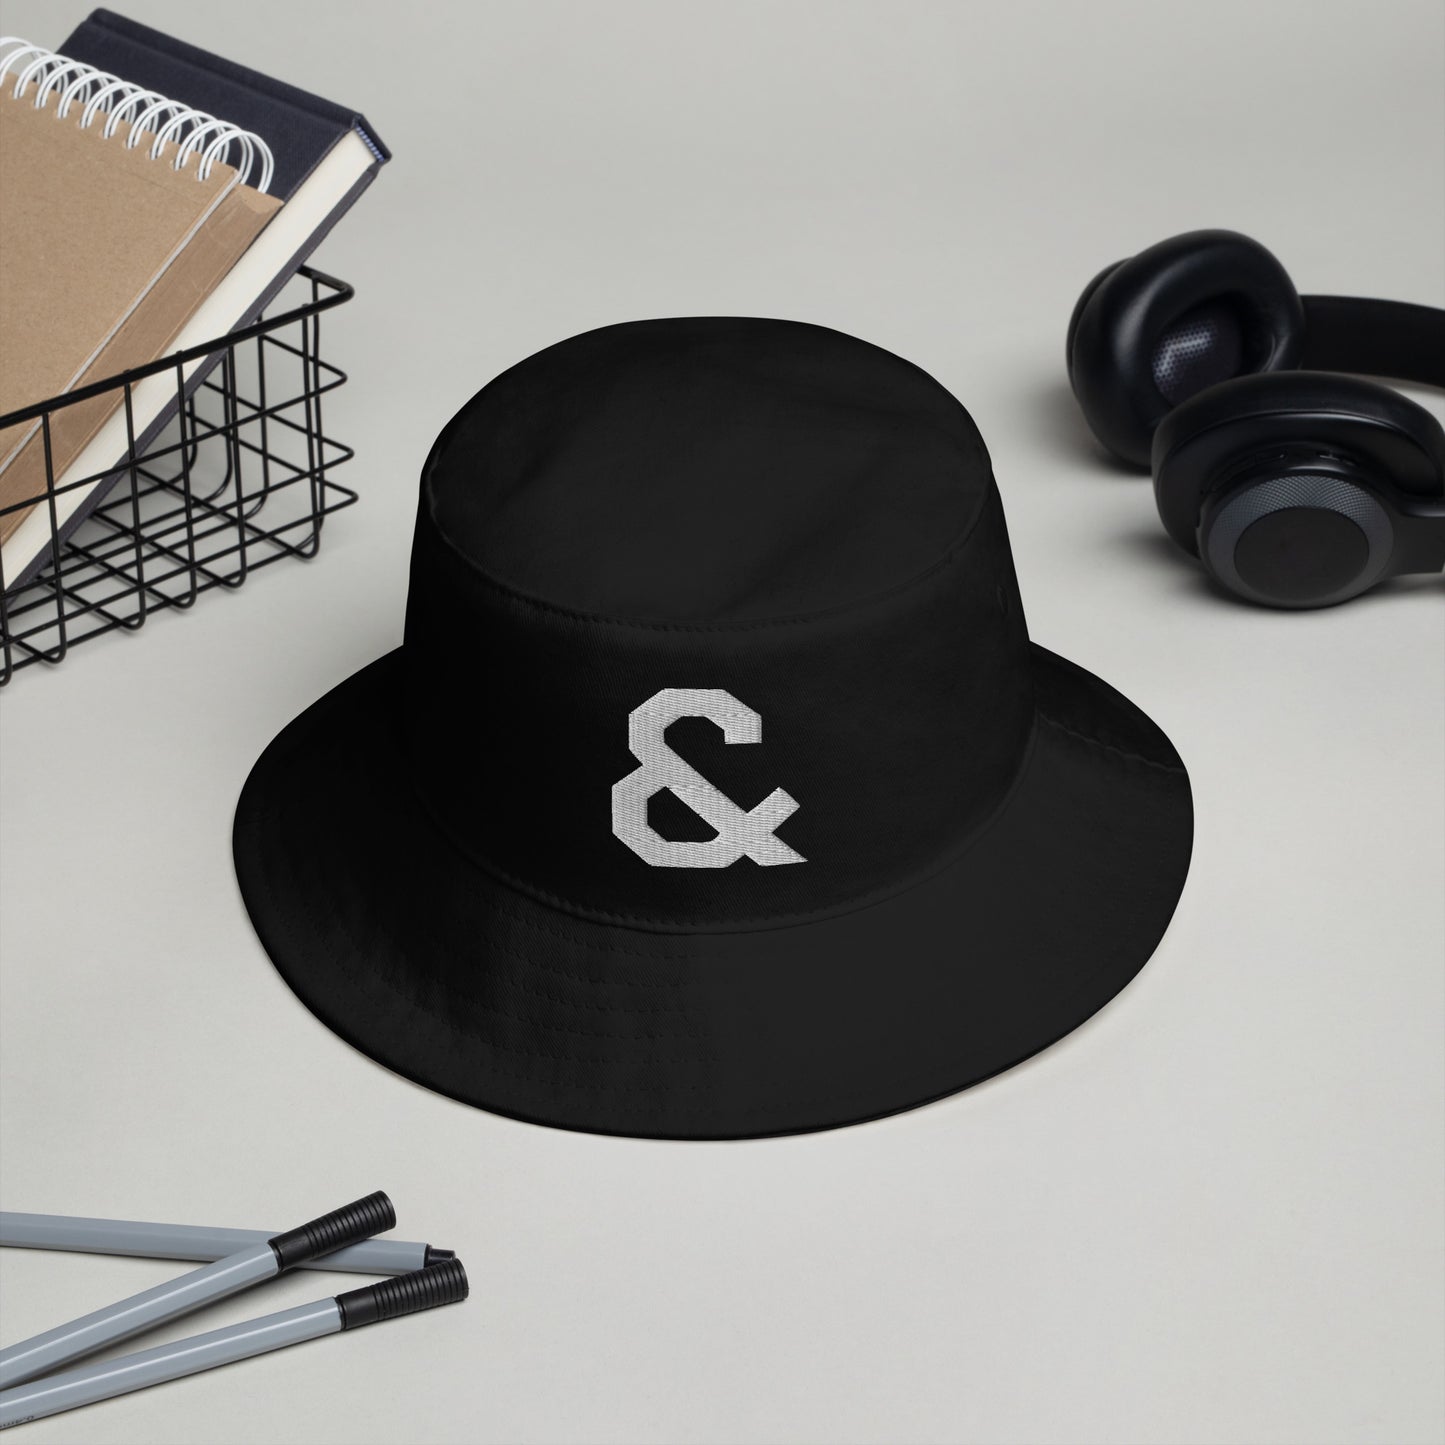 Ampersand Embroidered Bucket Hat